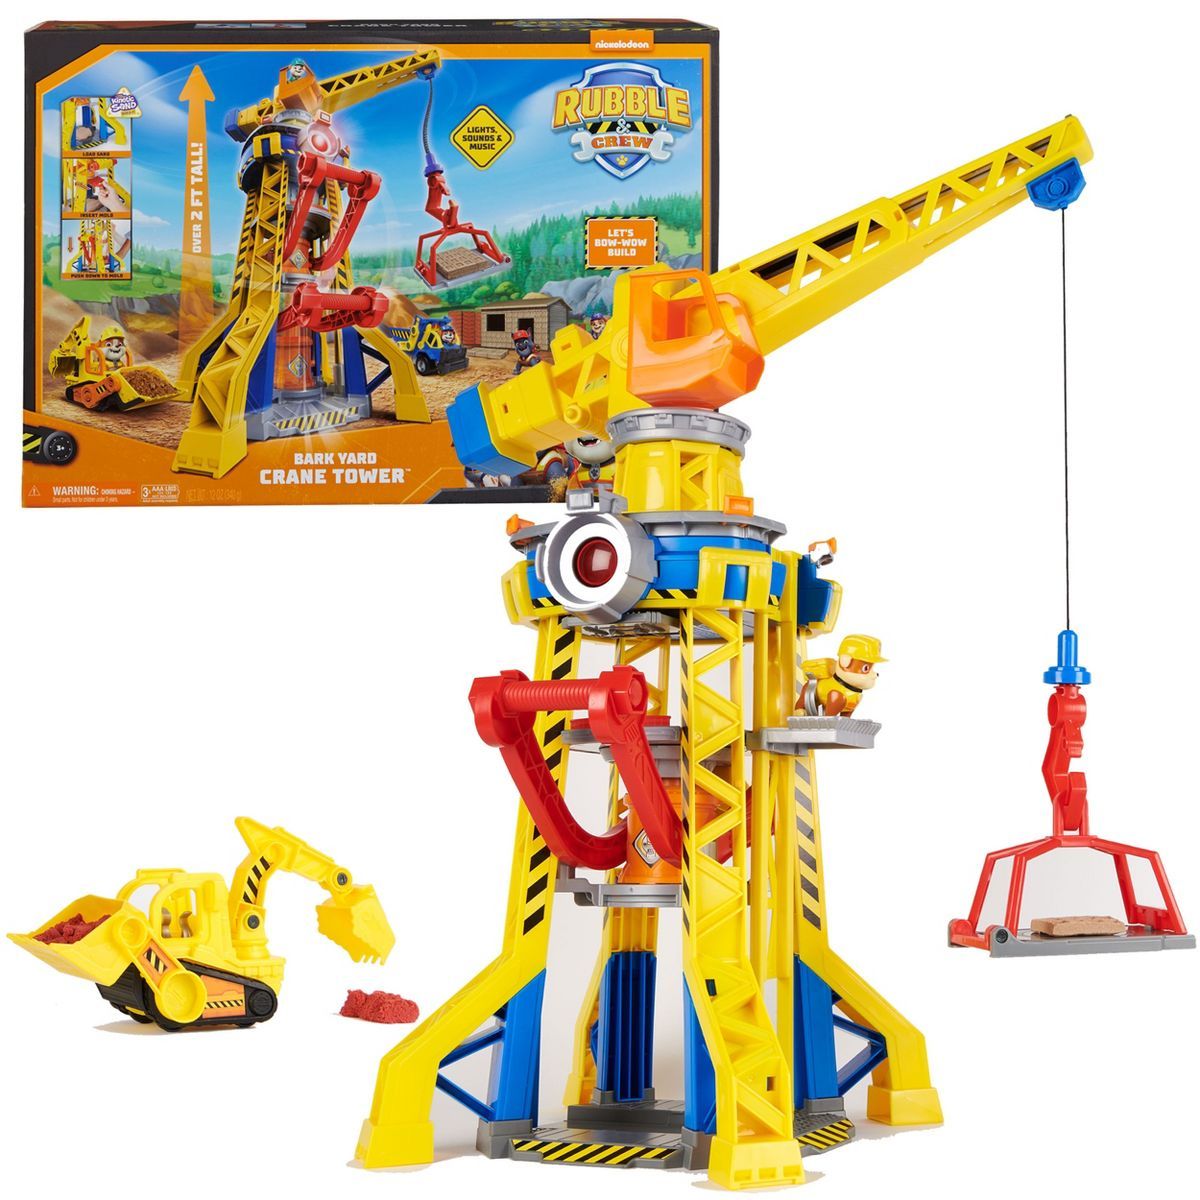 Rubble & Crew Rubble Barkyard Toy Vehicle Playset | Target